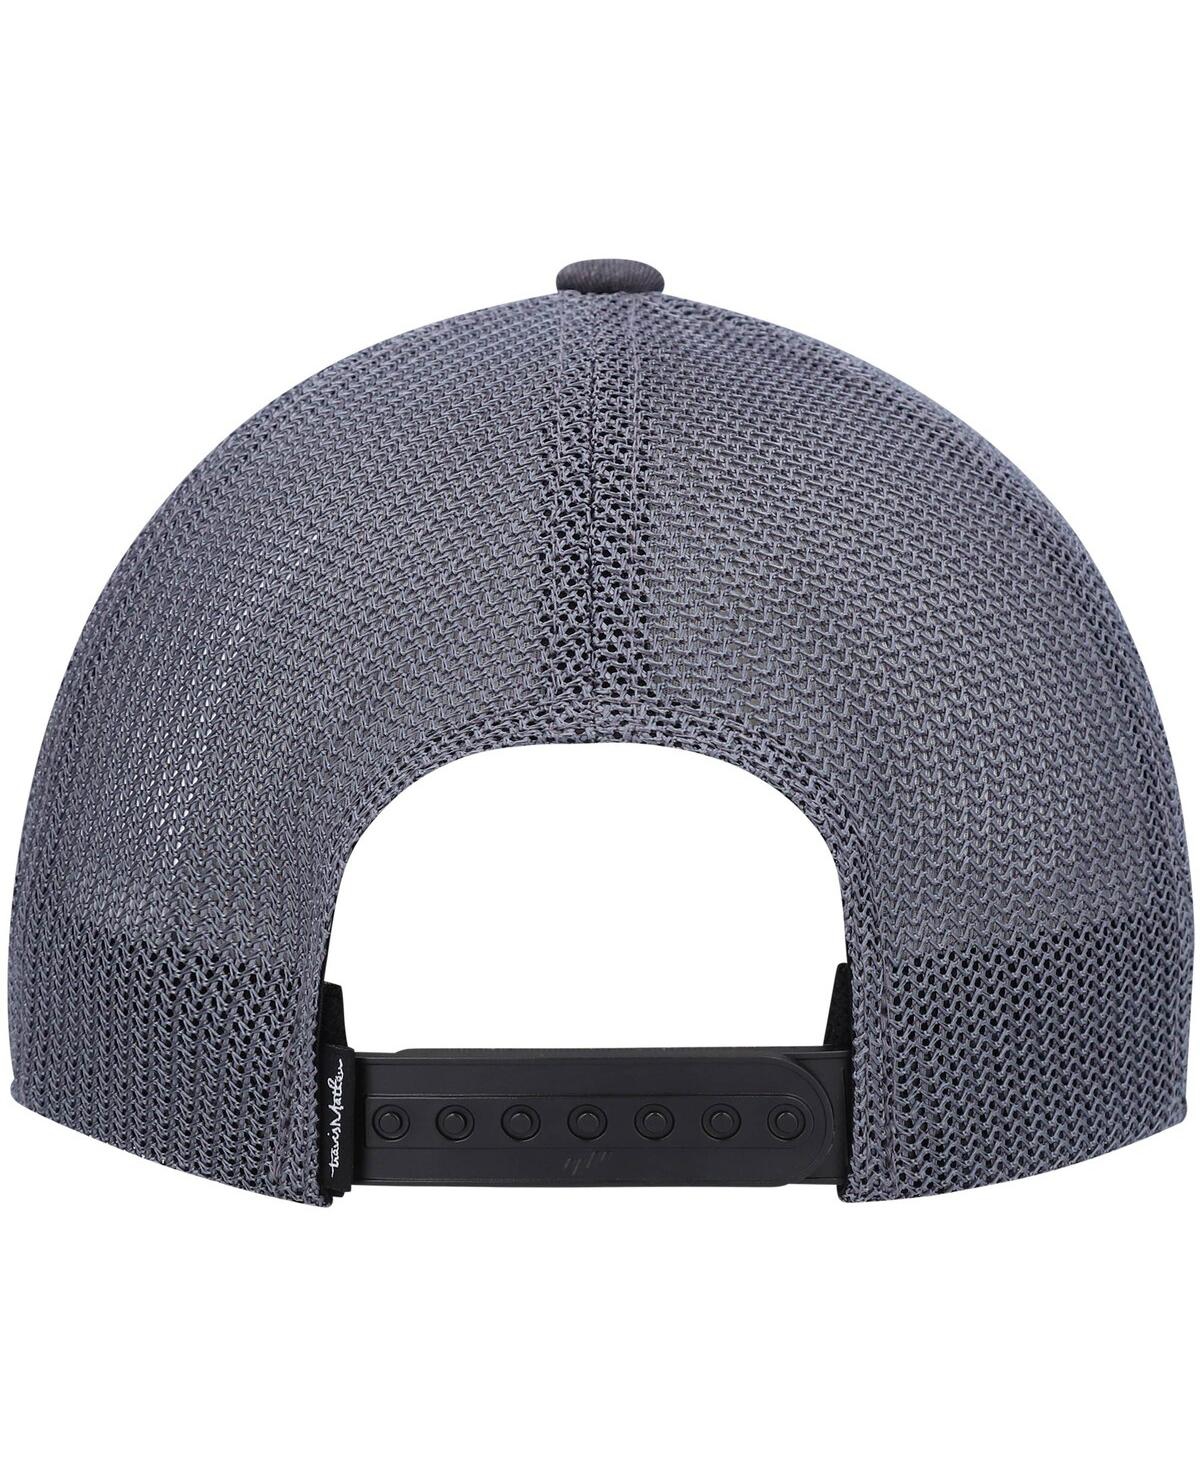 Shop Travis Mathew Men's Travismathew Heathered Charcoal Widder 2.0 Trucker Snapback Hat